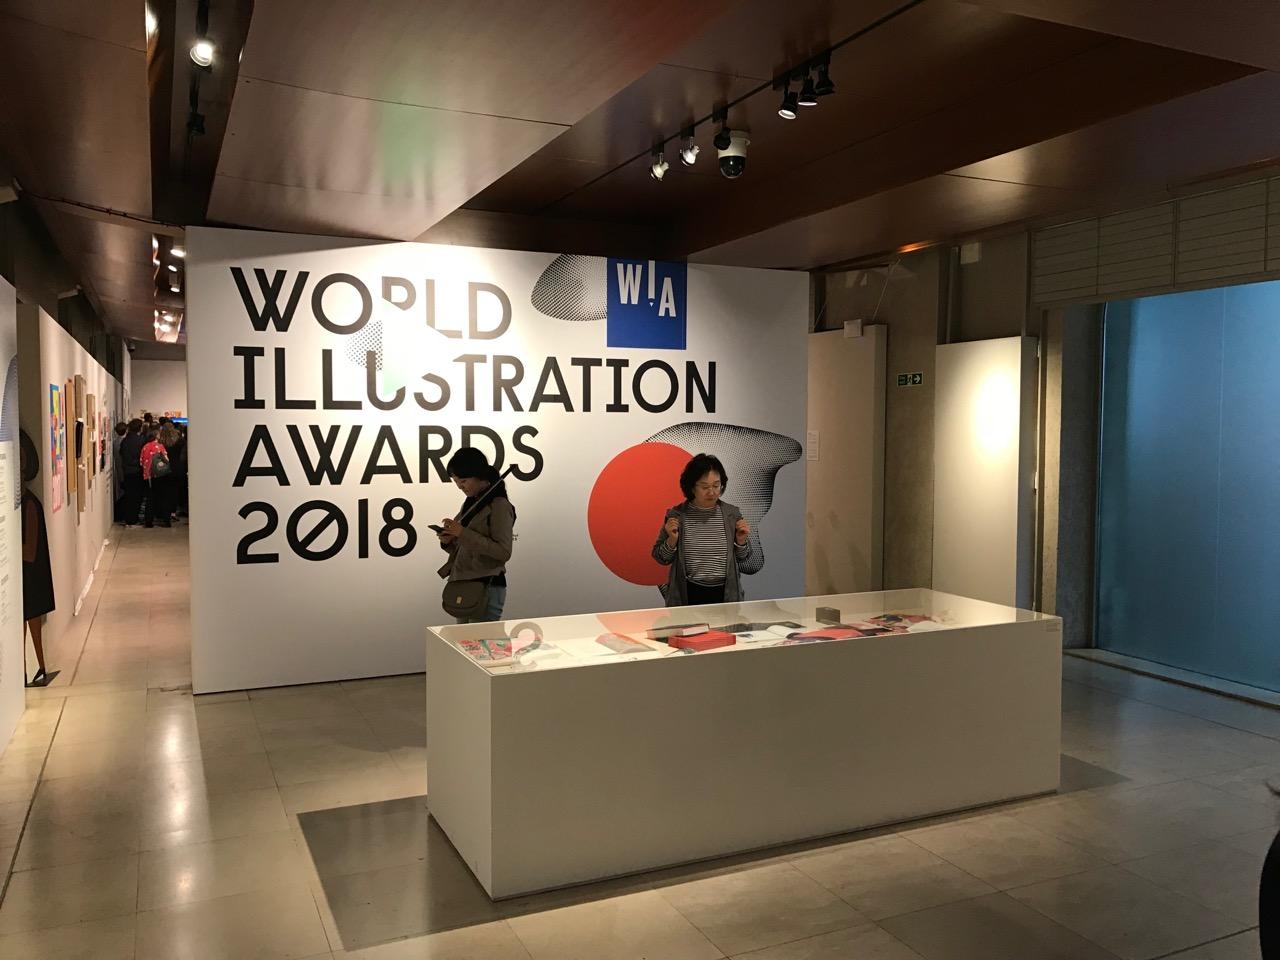 Exhibit in London 2018